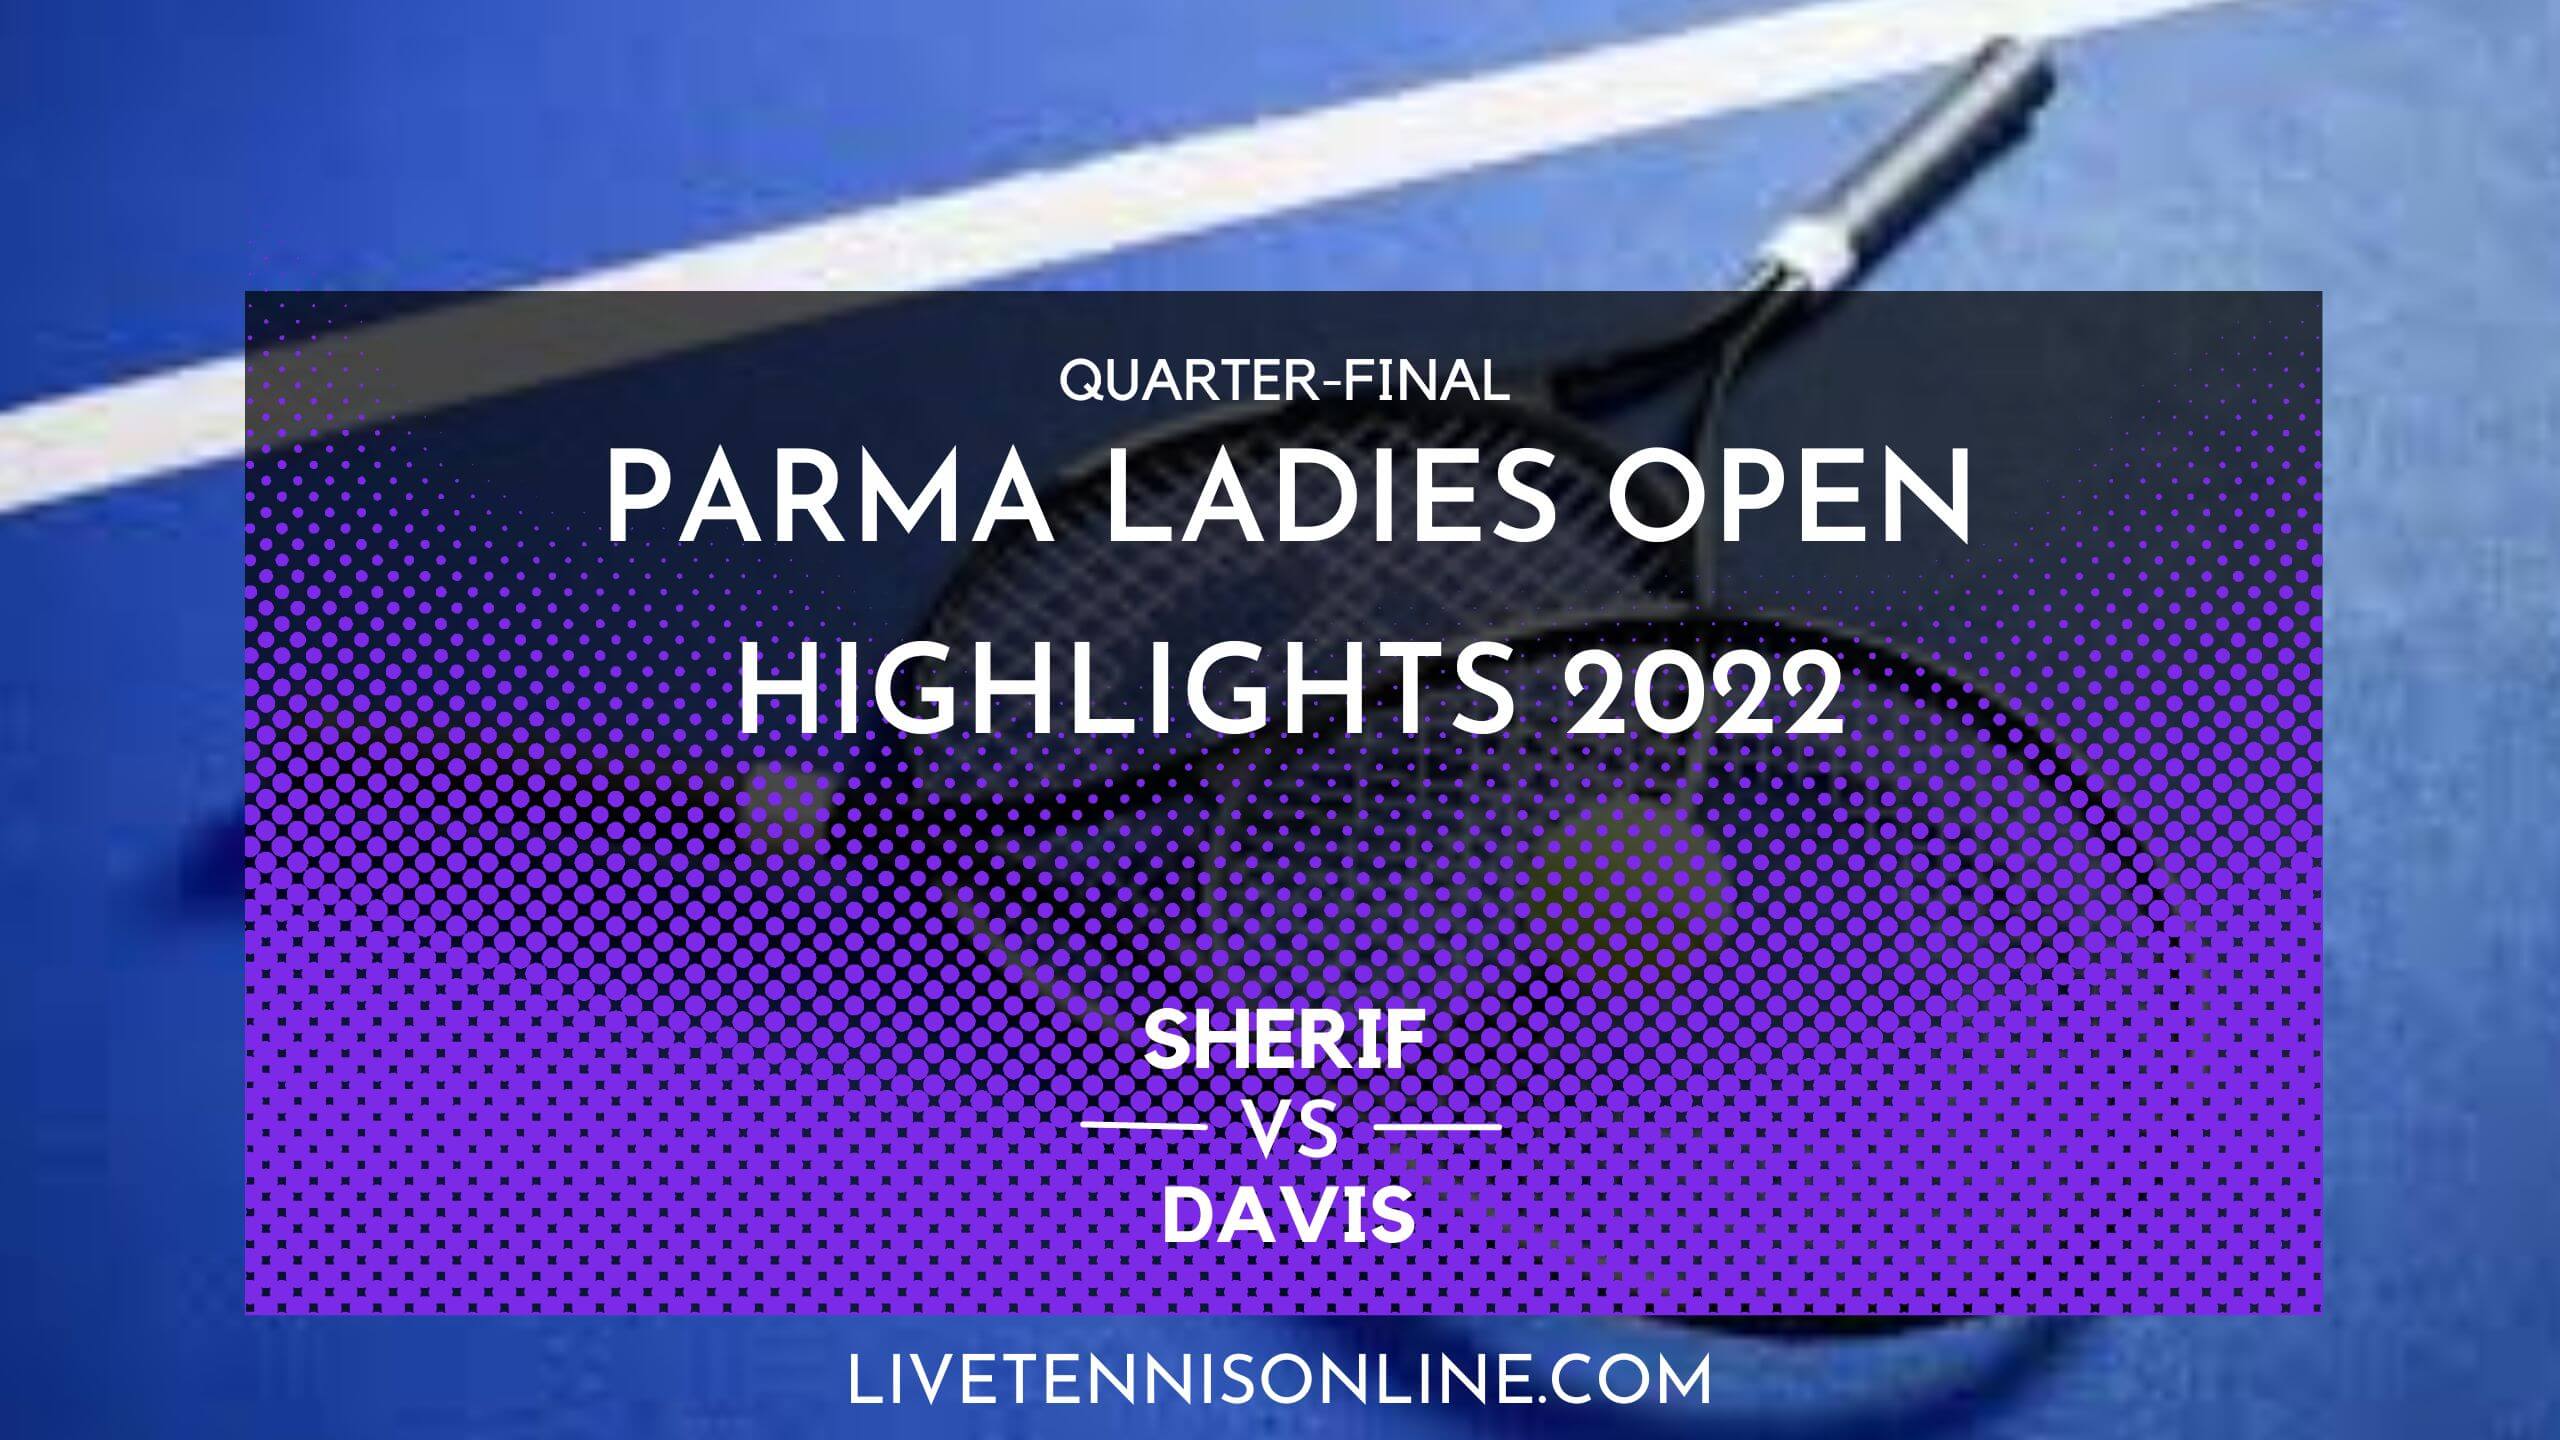 Sherif Vs Davis QF Highlights 2022 Parma Ladies Open